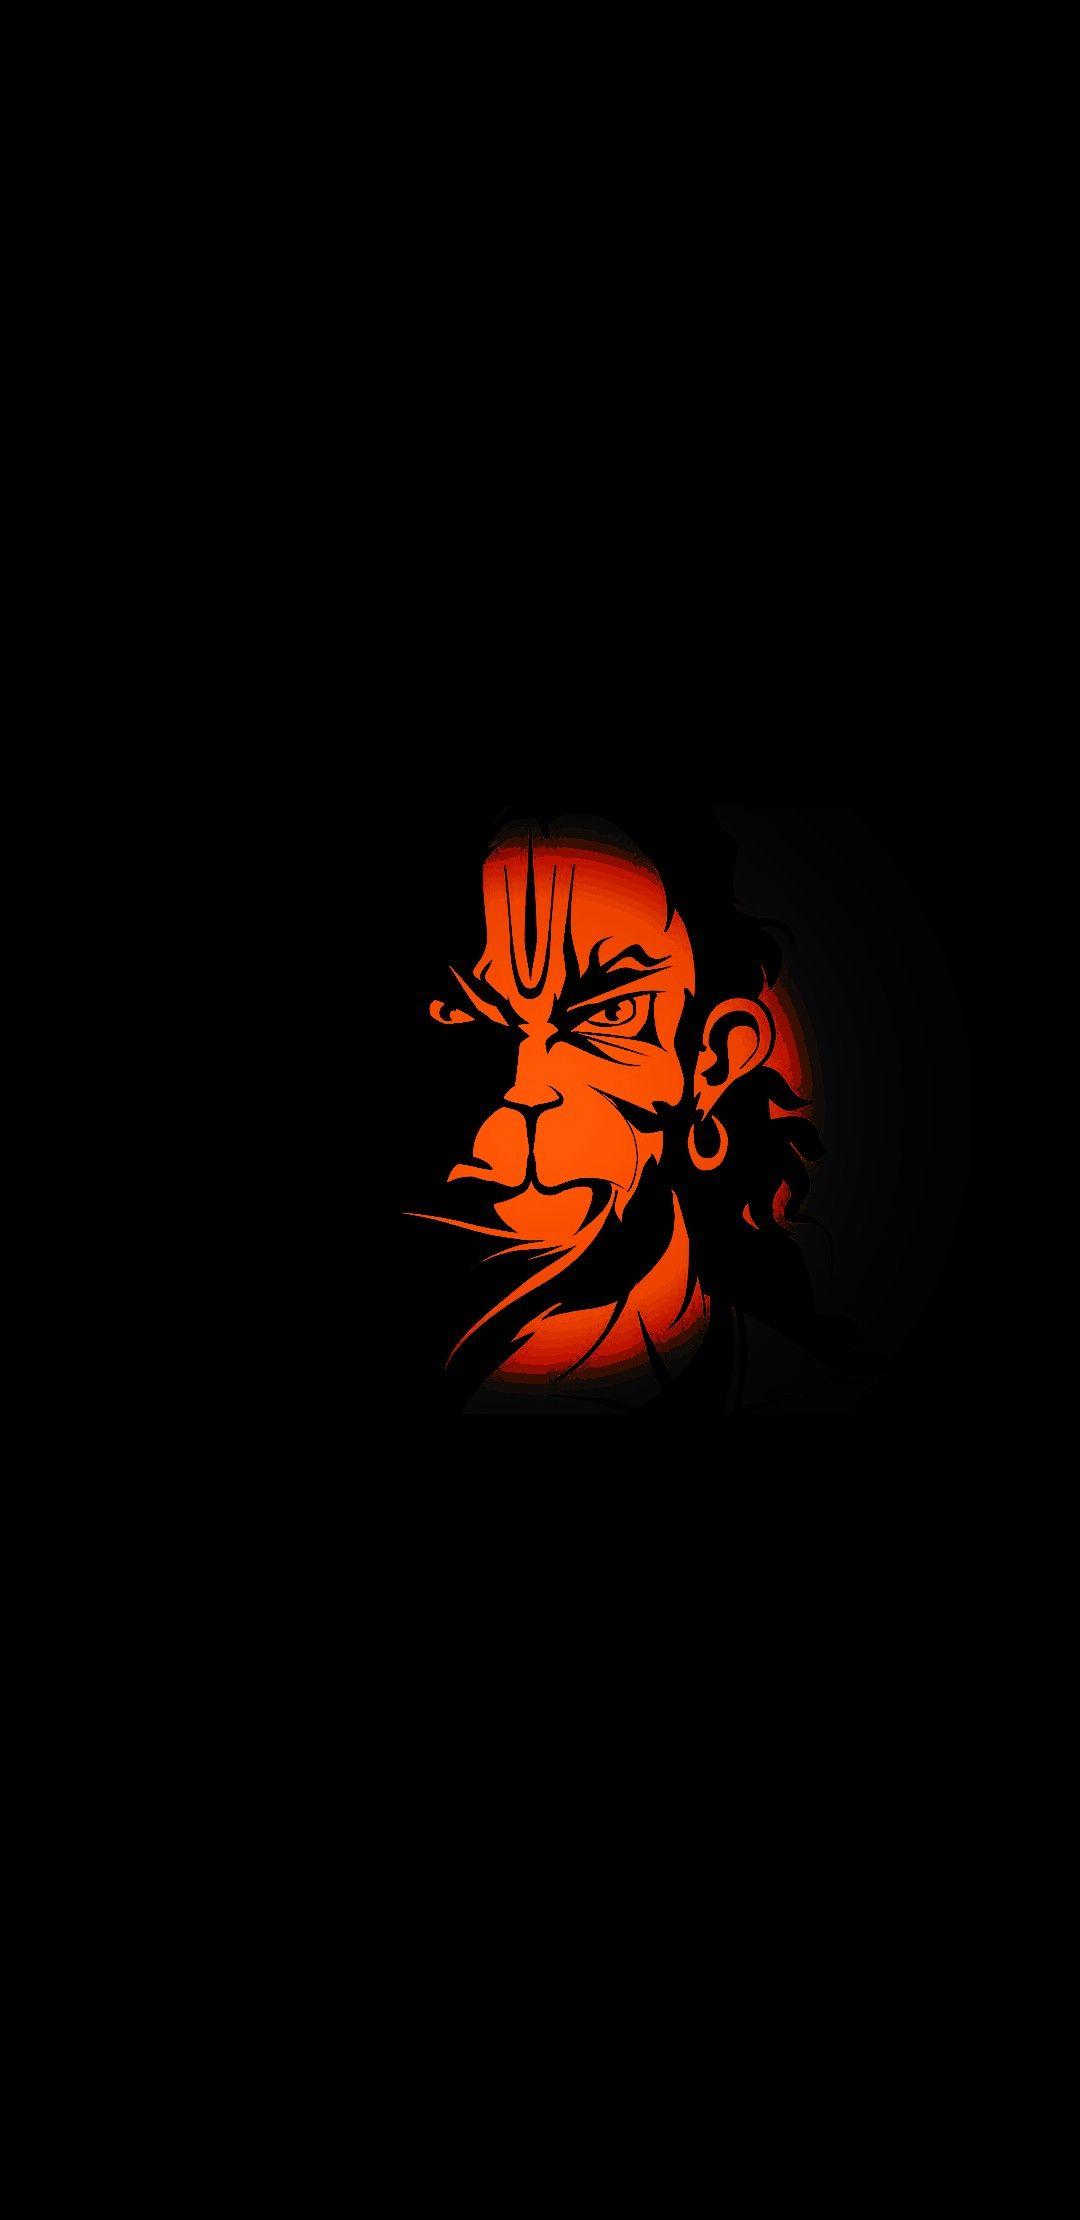 Hanuman mask Cut Out Stock Images & Pictures - Alamy